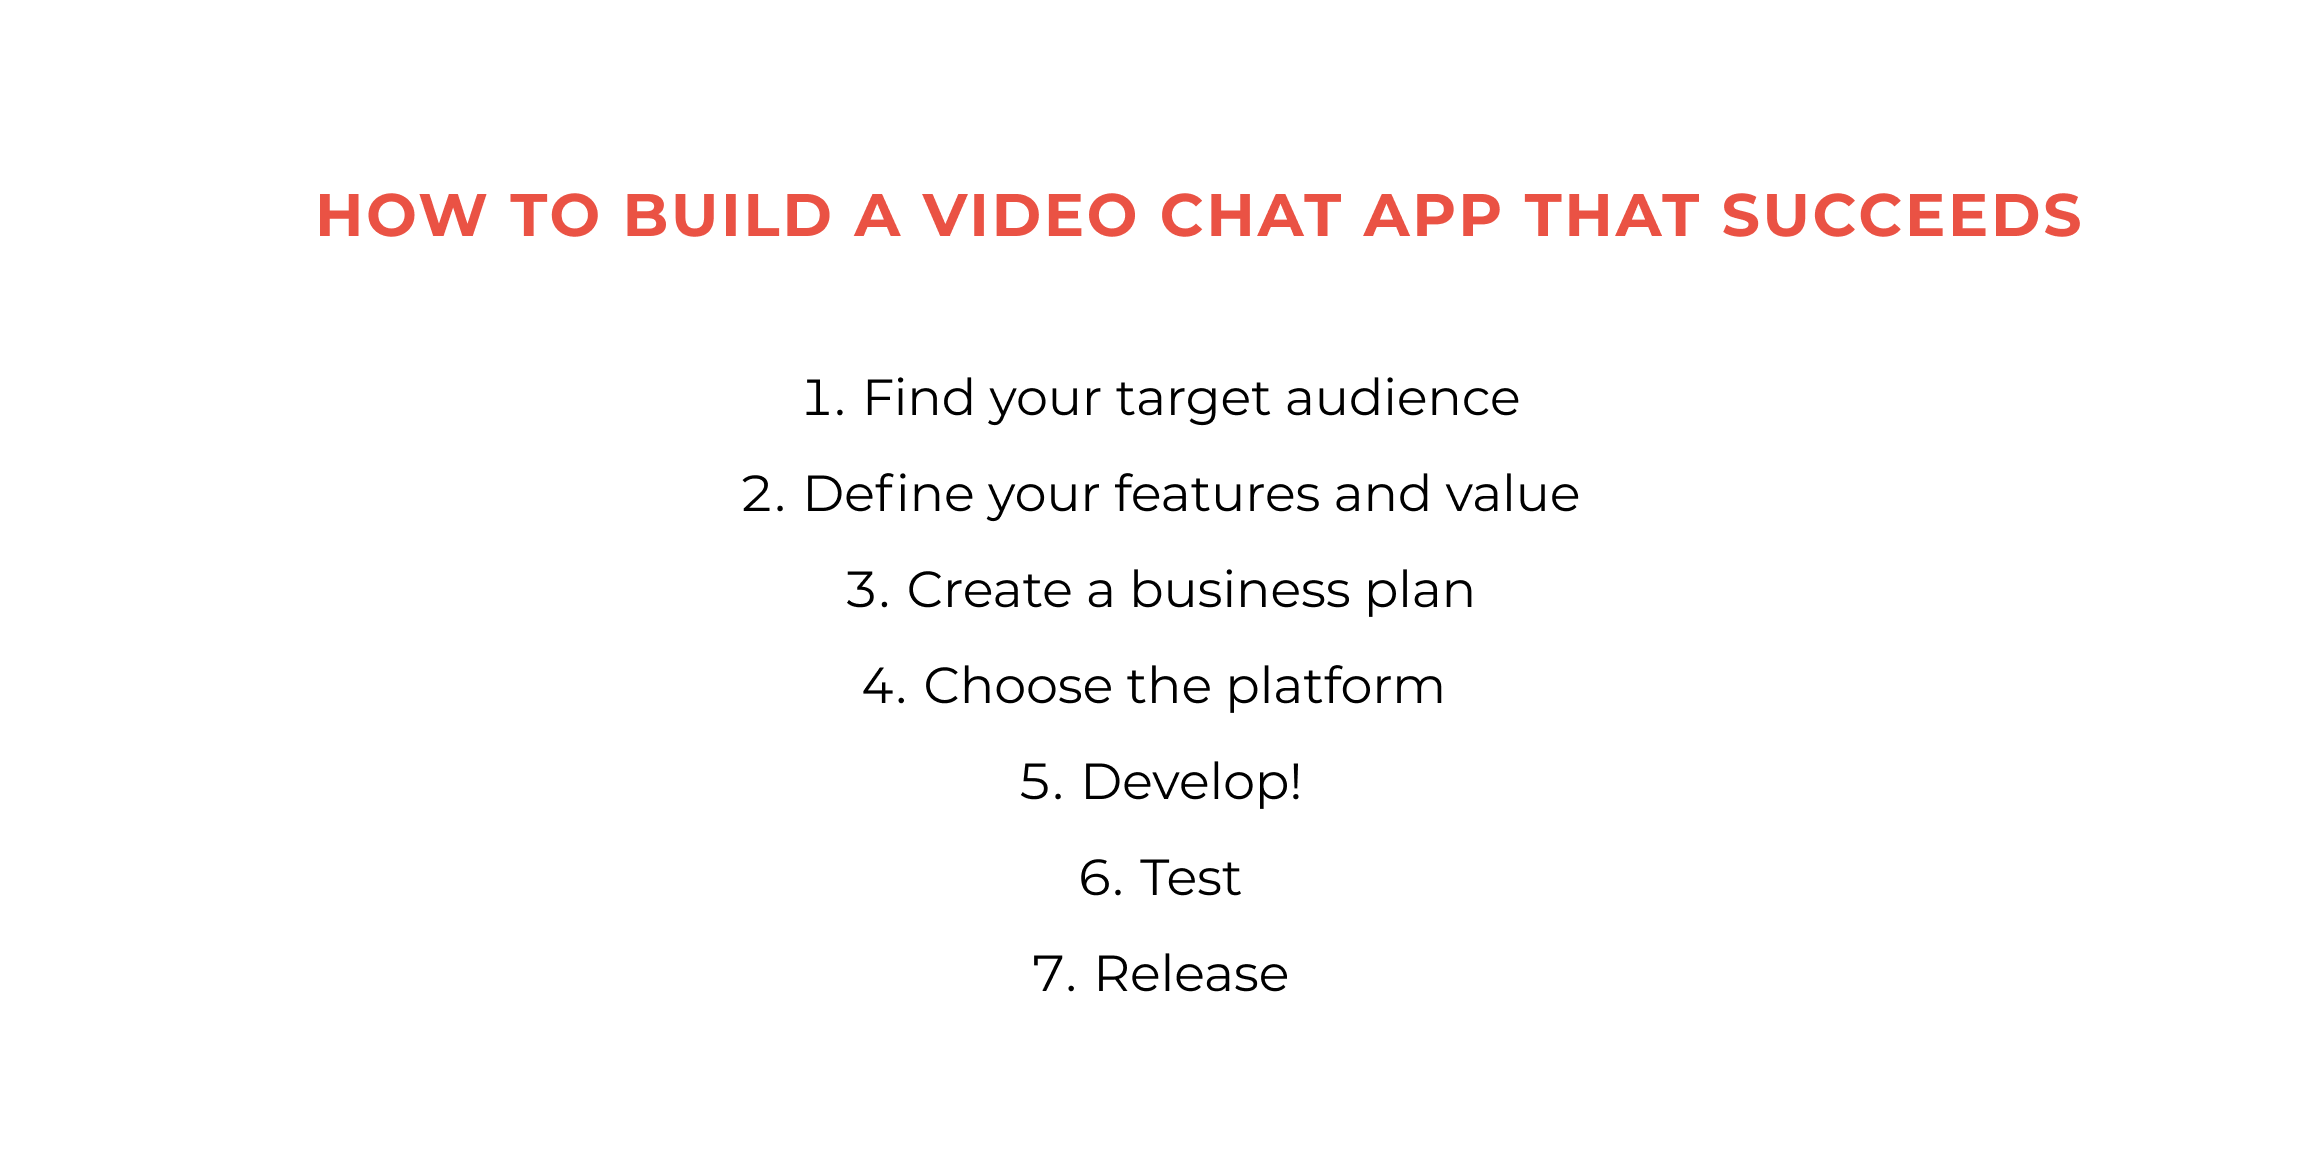 Video calling app development steps